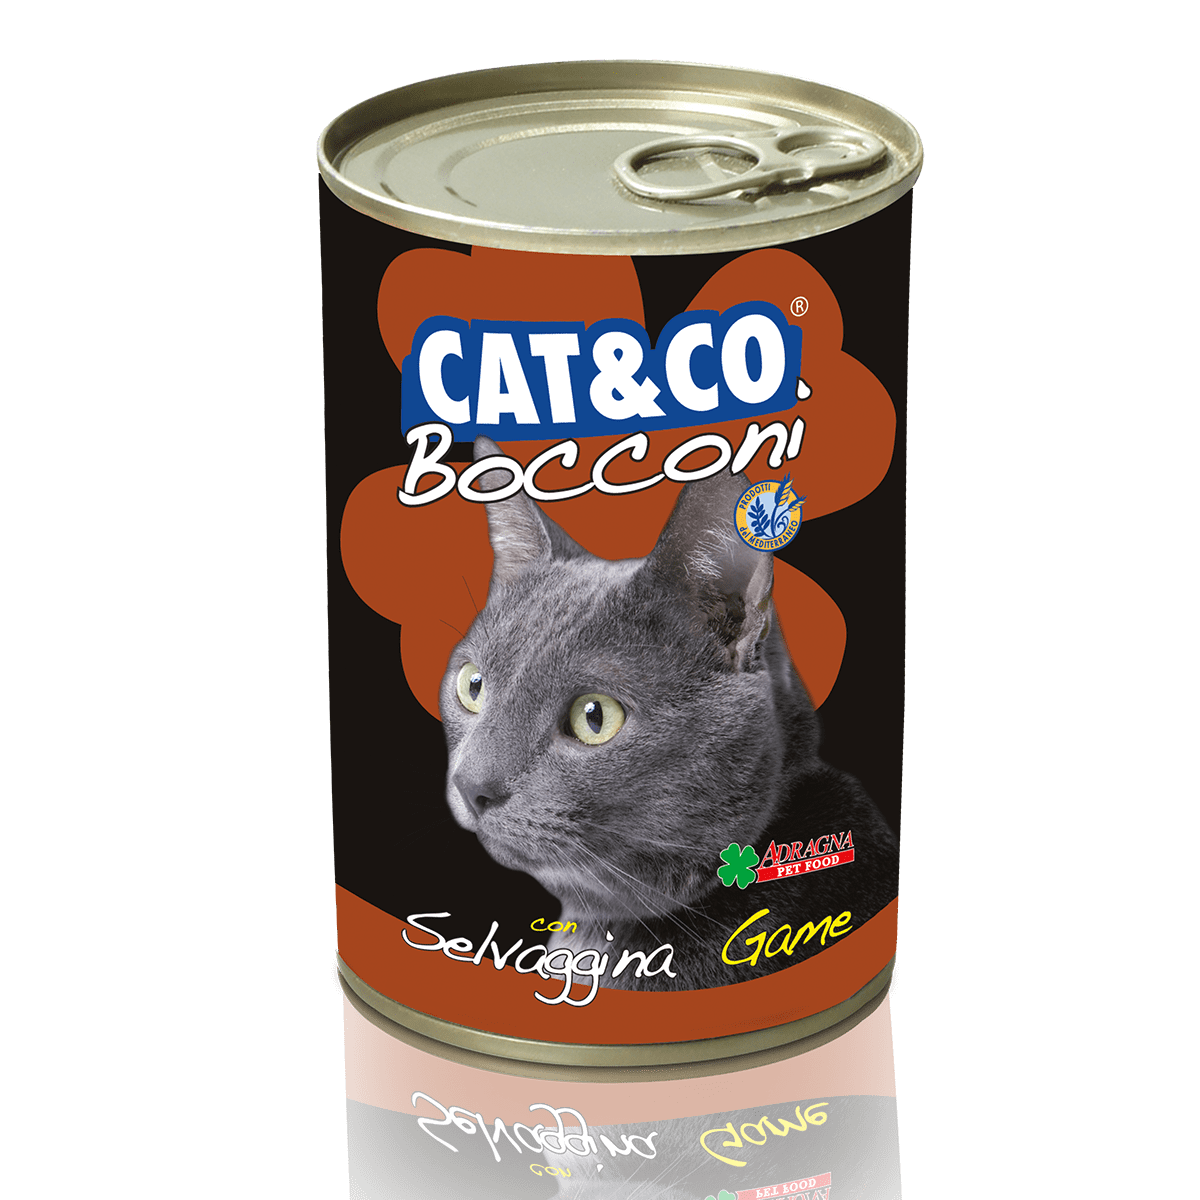 Cat & Co Bocconi - Game